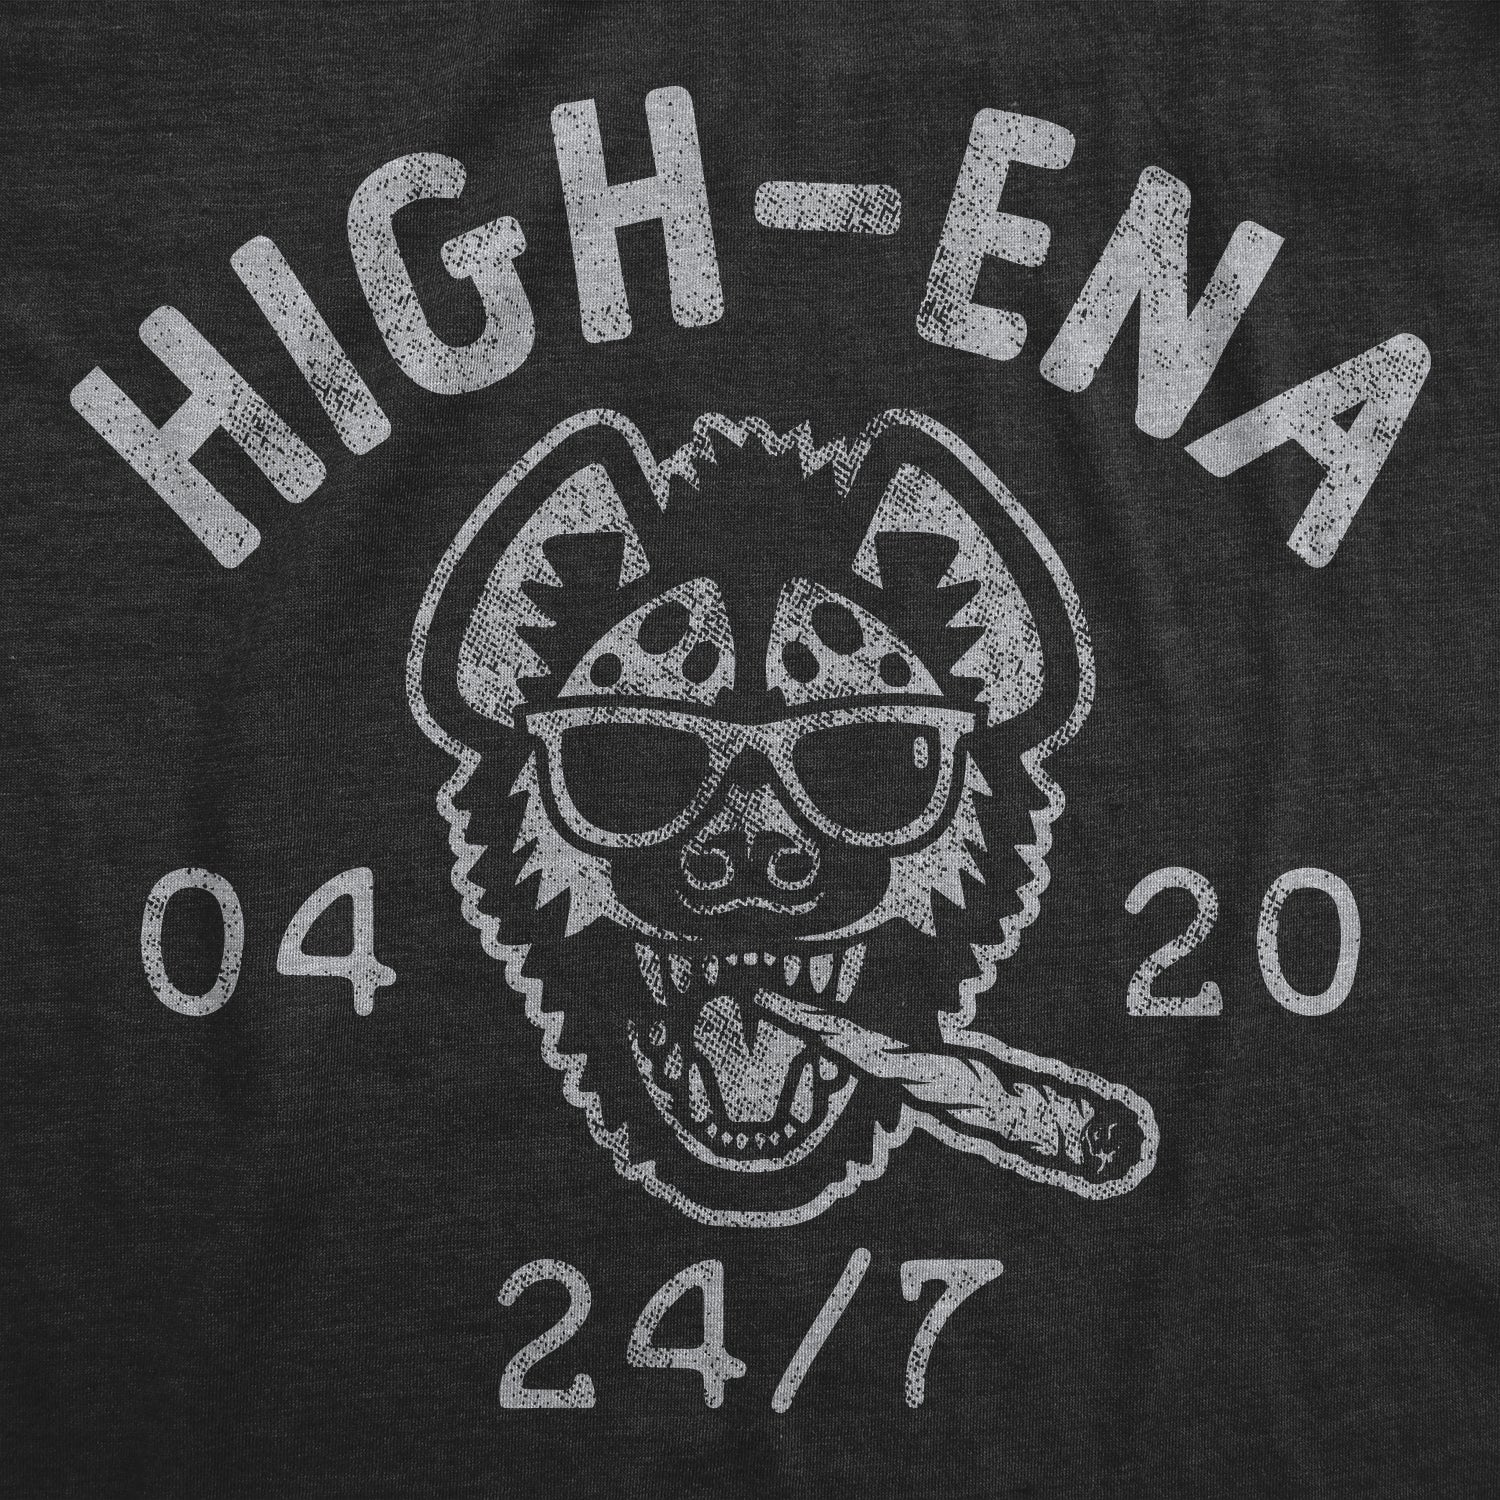 Funny Heather Black High-Ena 420 Mens T Shirt Nerdy 420 Animal Sarcastic Tee